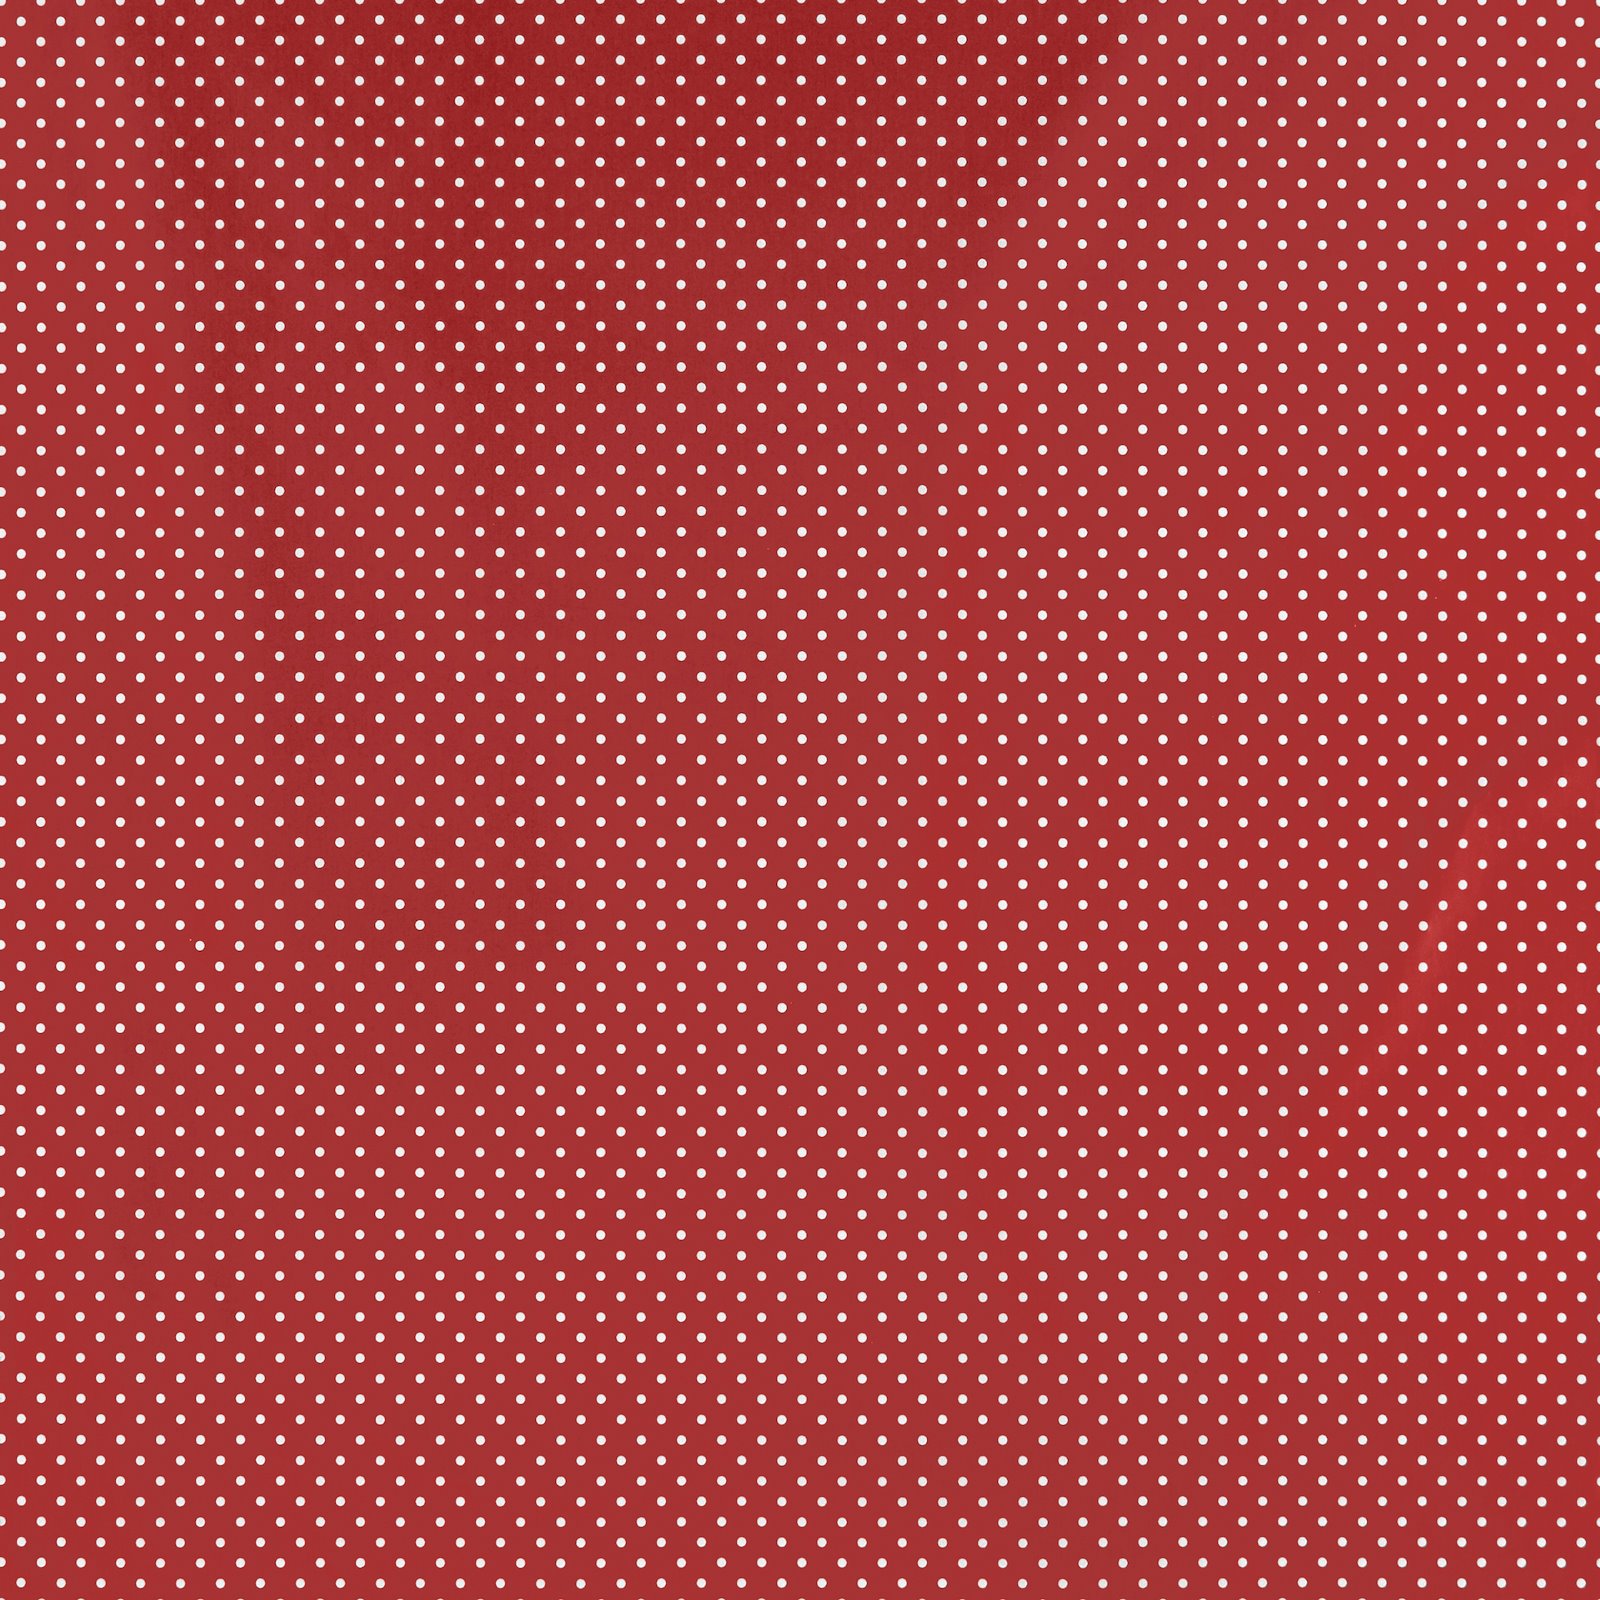 Vaxduk m textilbaksida, röd m vit prick 860161_pack_sp